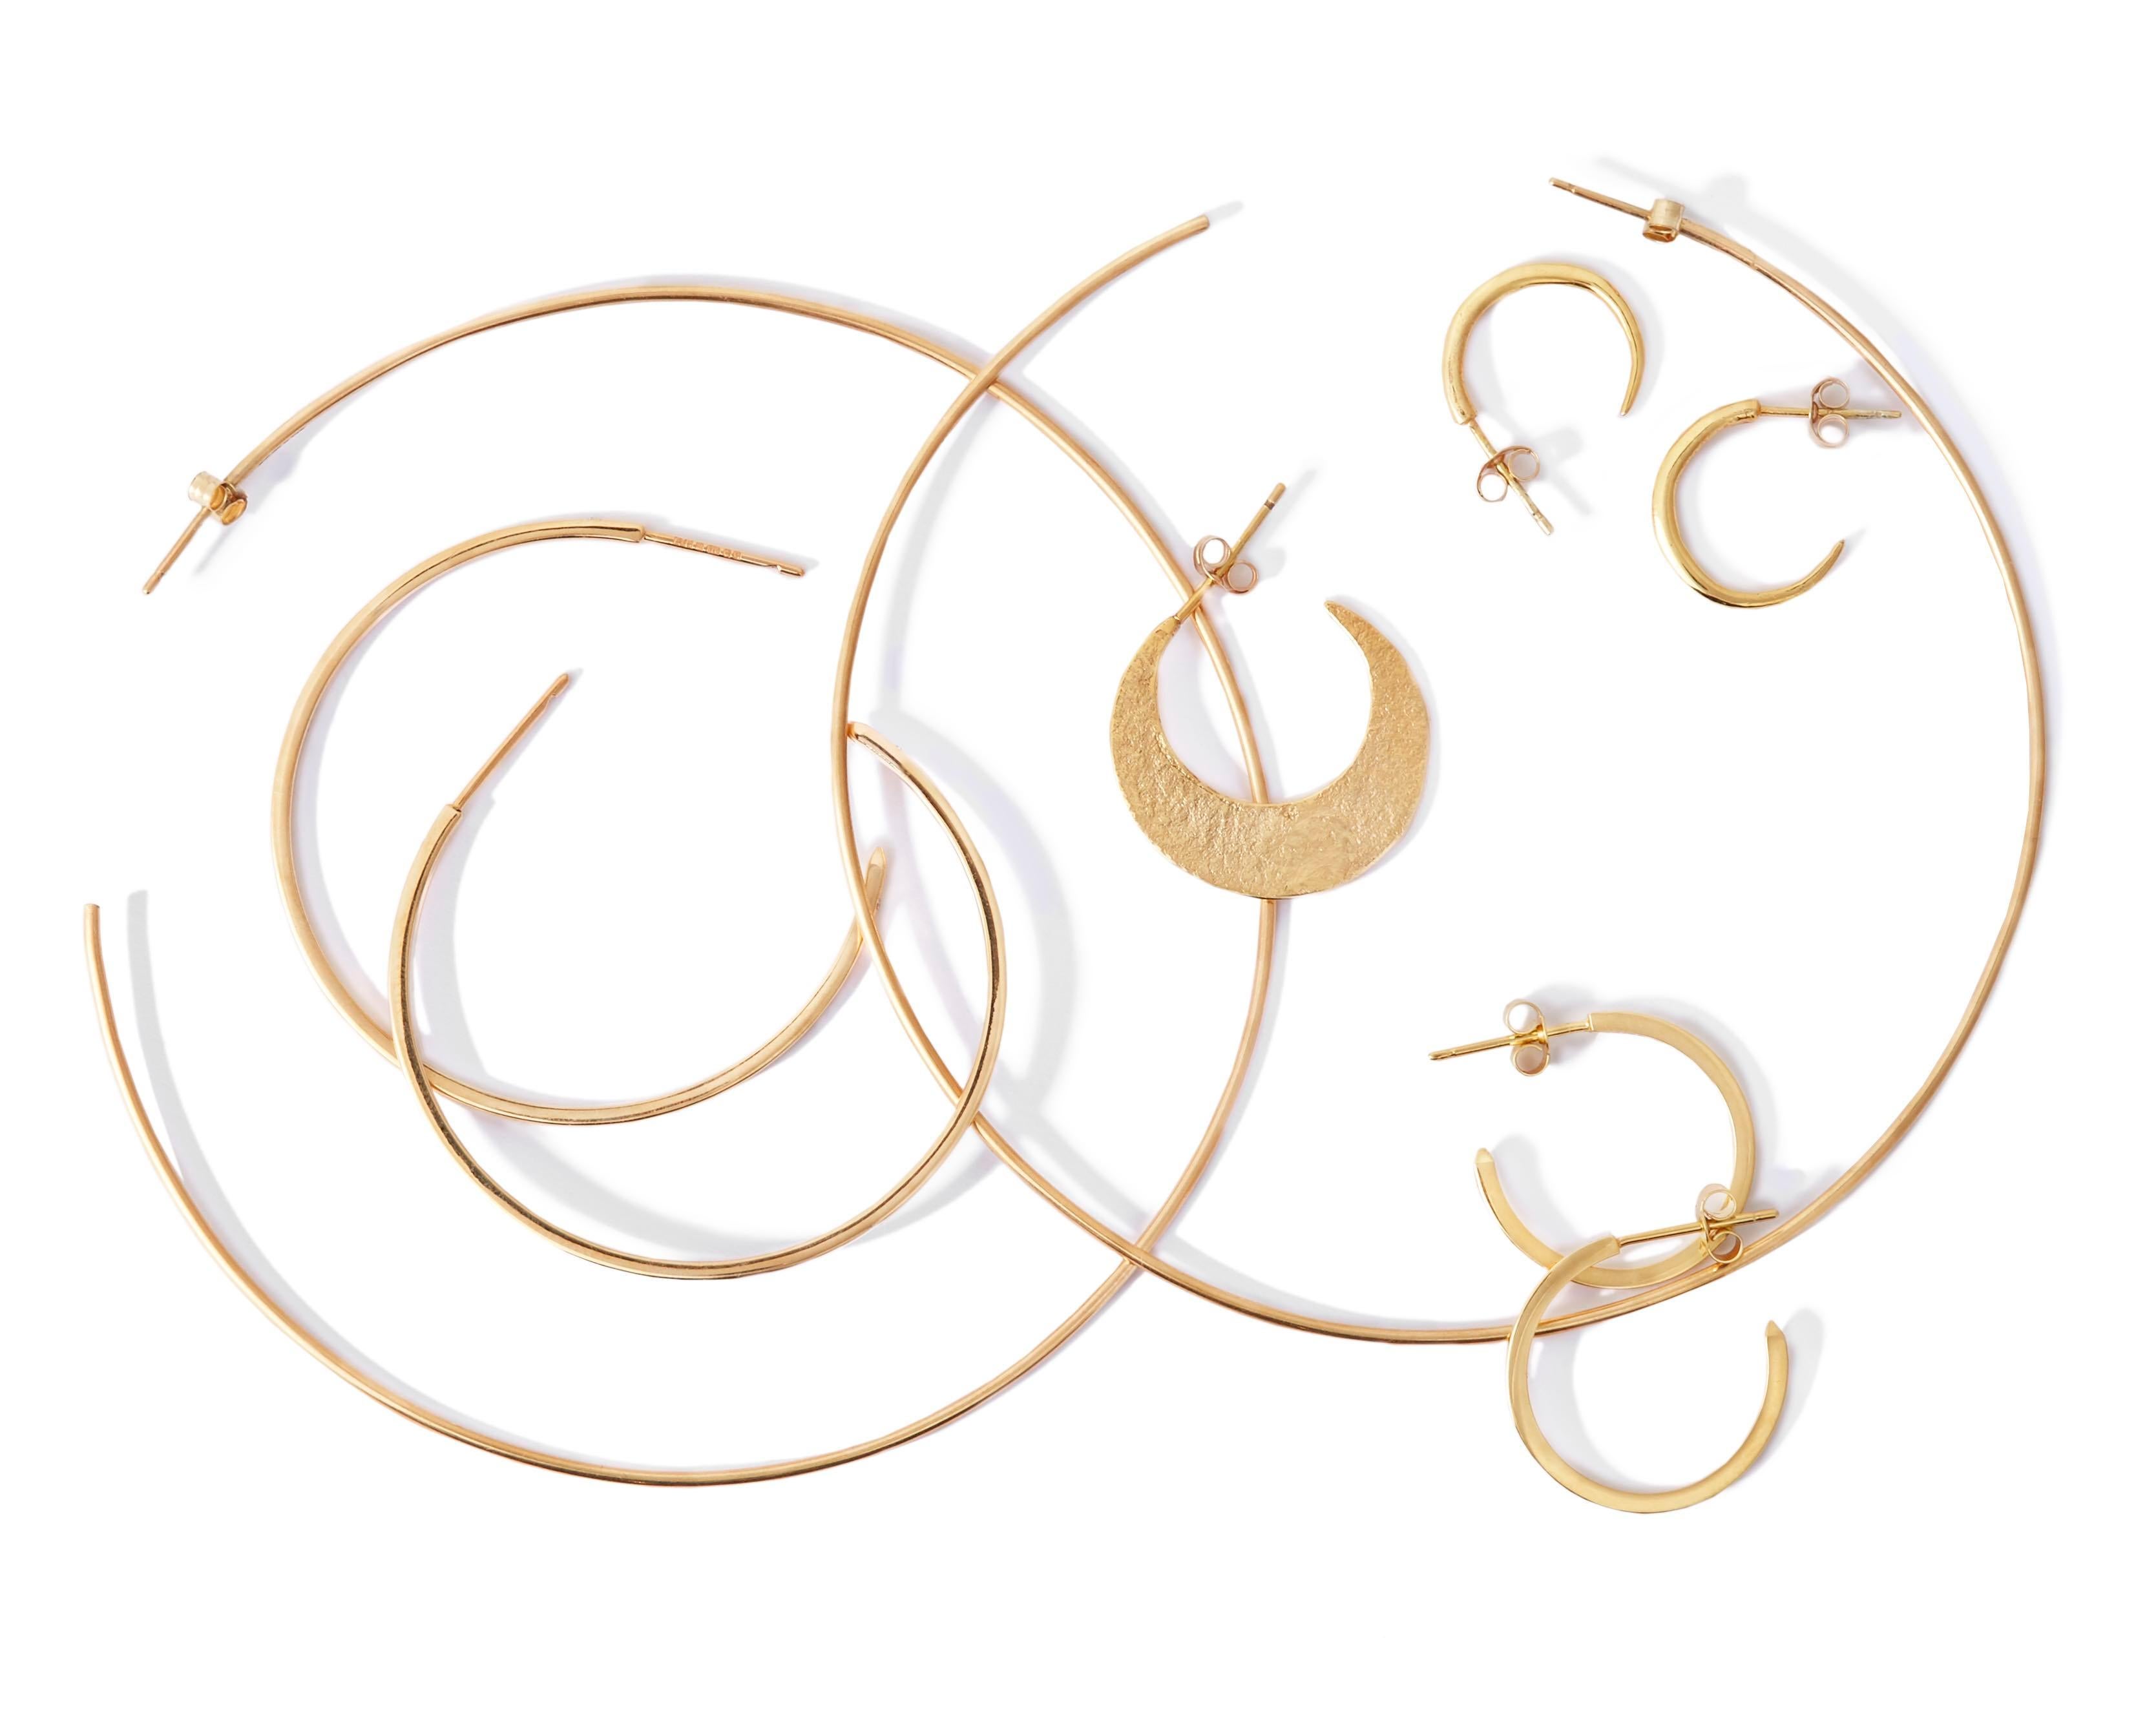 Round Cut 18 Karat Gold Hoop Earrings with White Diamonds by Allison Bryan